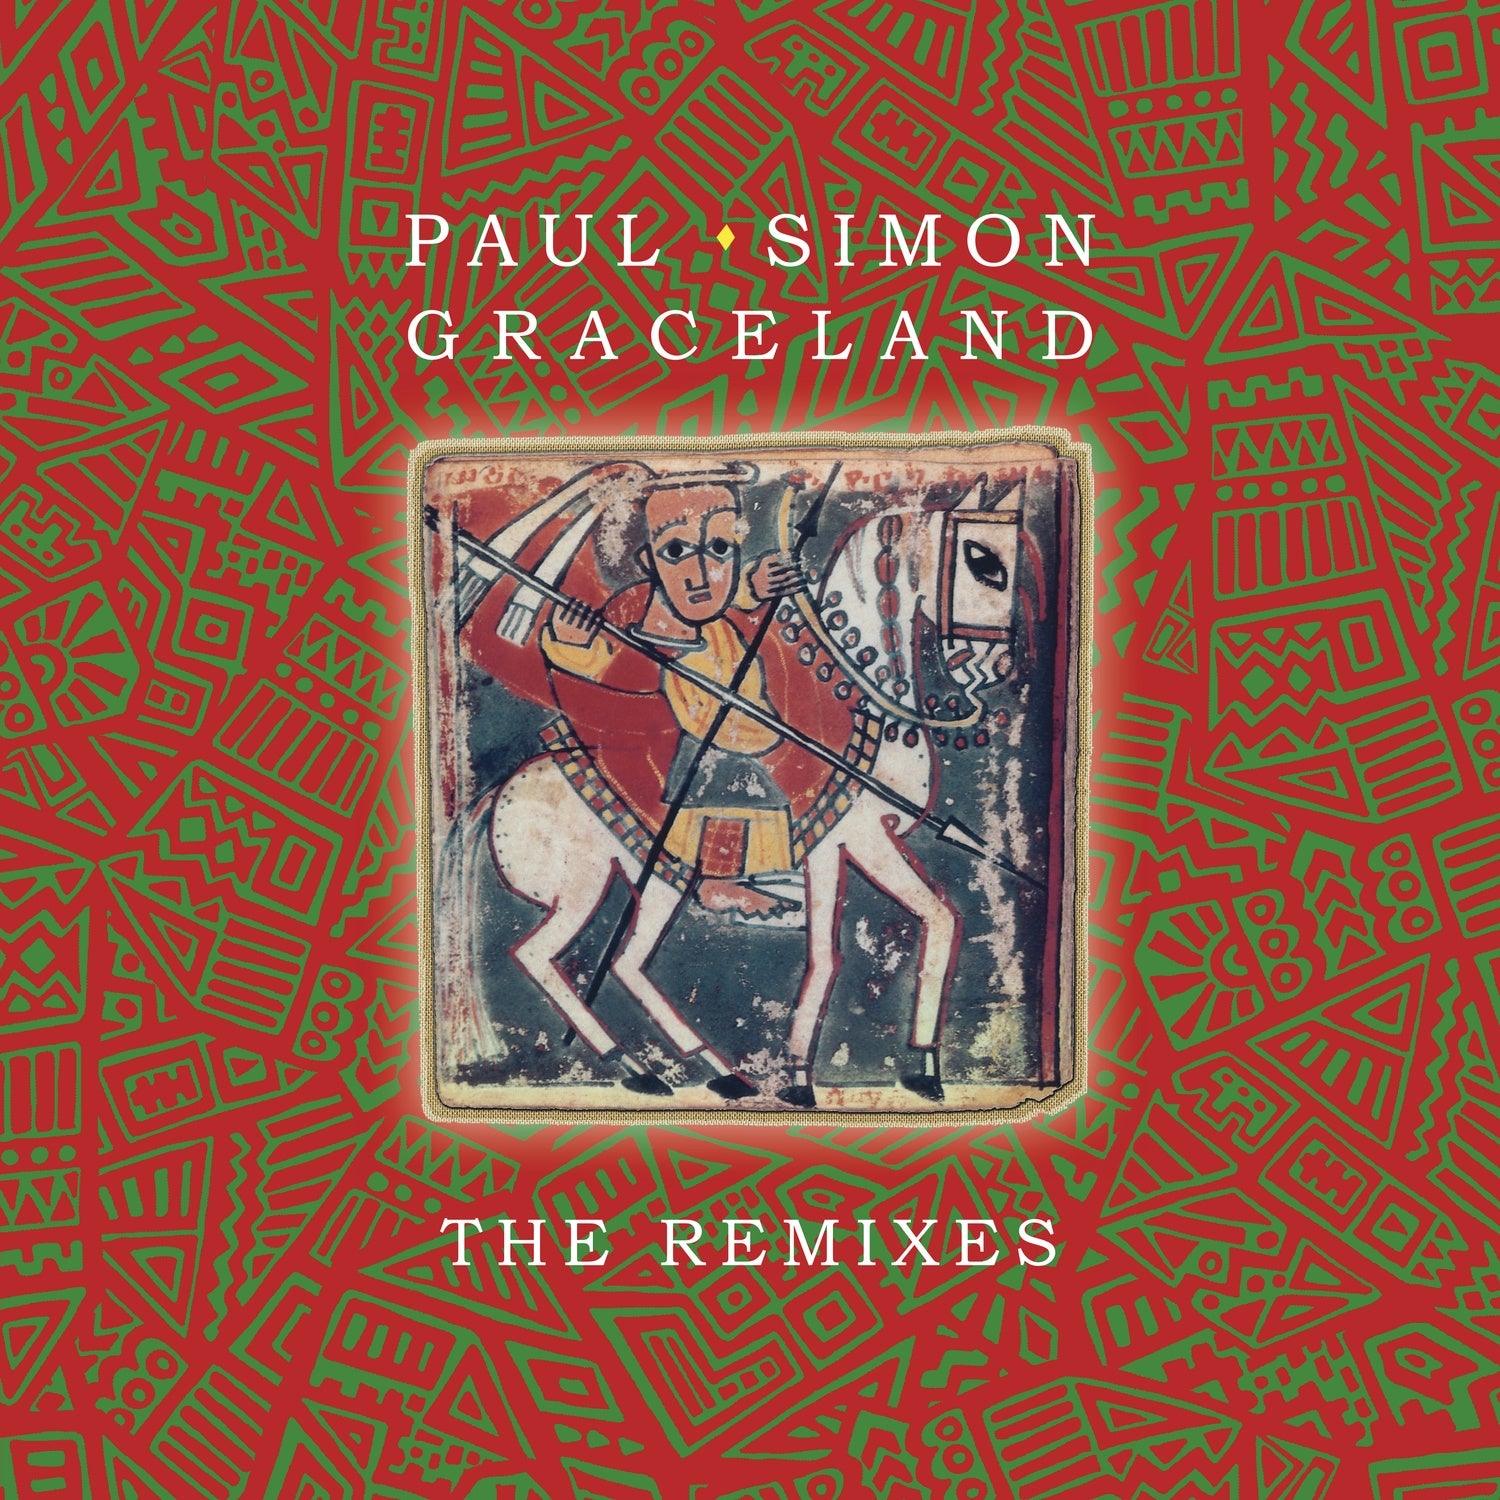 Paul Simon / Various - Graceland: The Remixes - New Vinyl 2 LP 2018 Legacy 'We Are Vinyl' 140 gram Pressing with Download - Rock / Dance